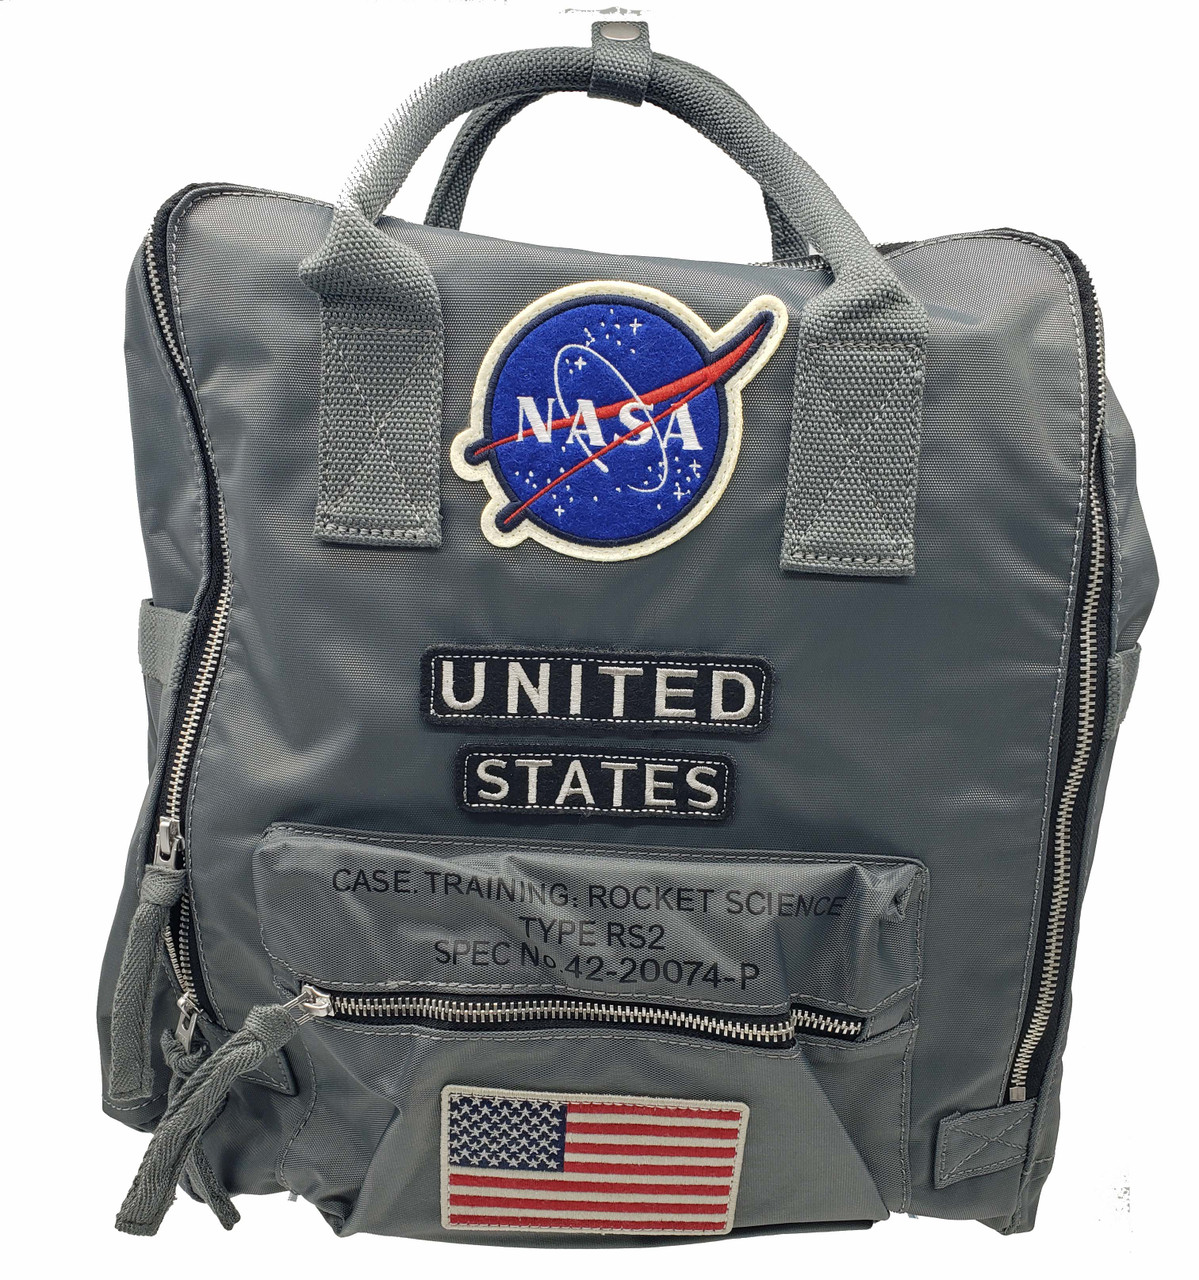 Apollo Backpack cloth bag